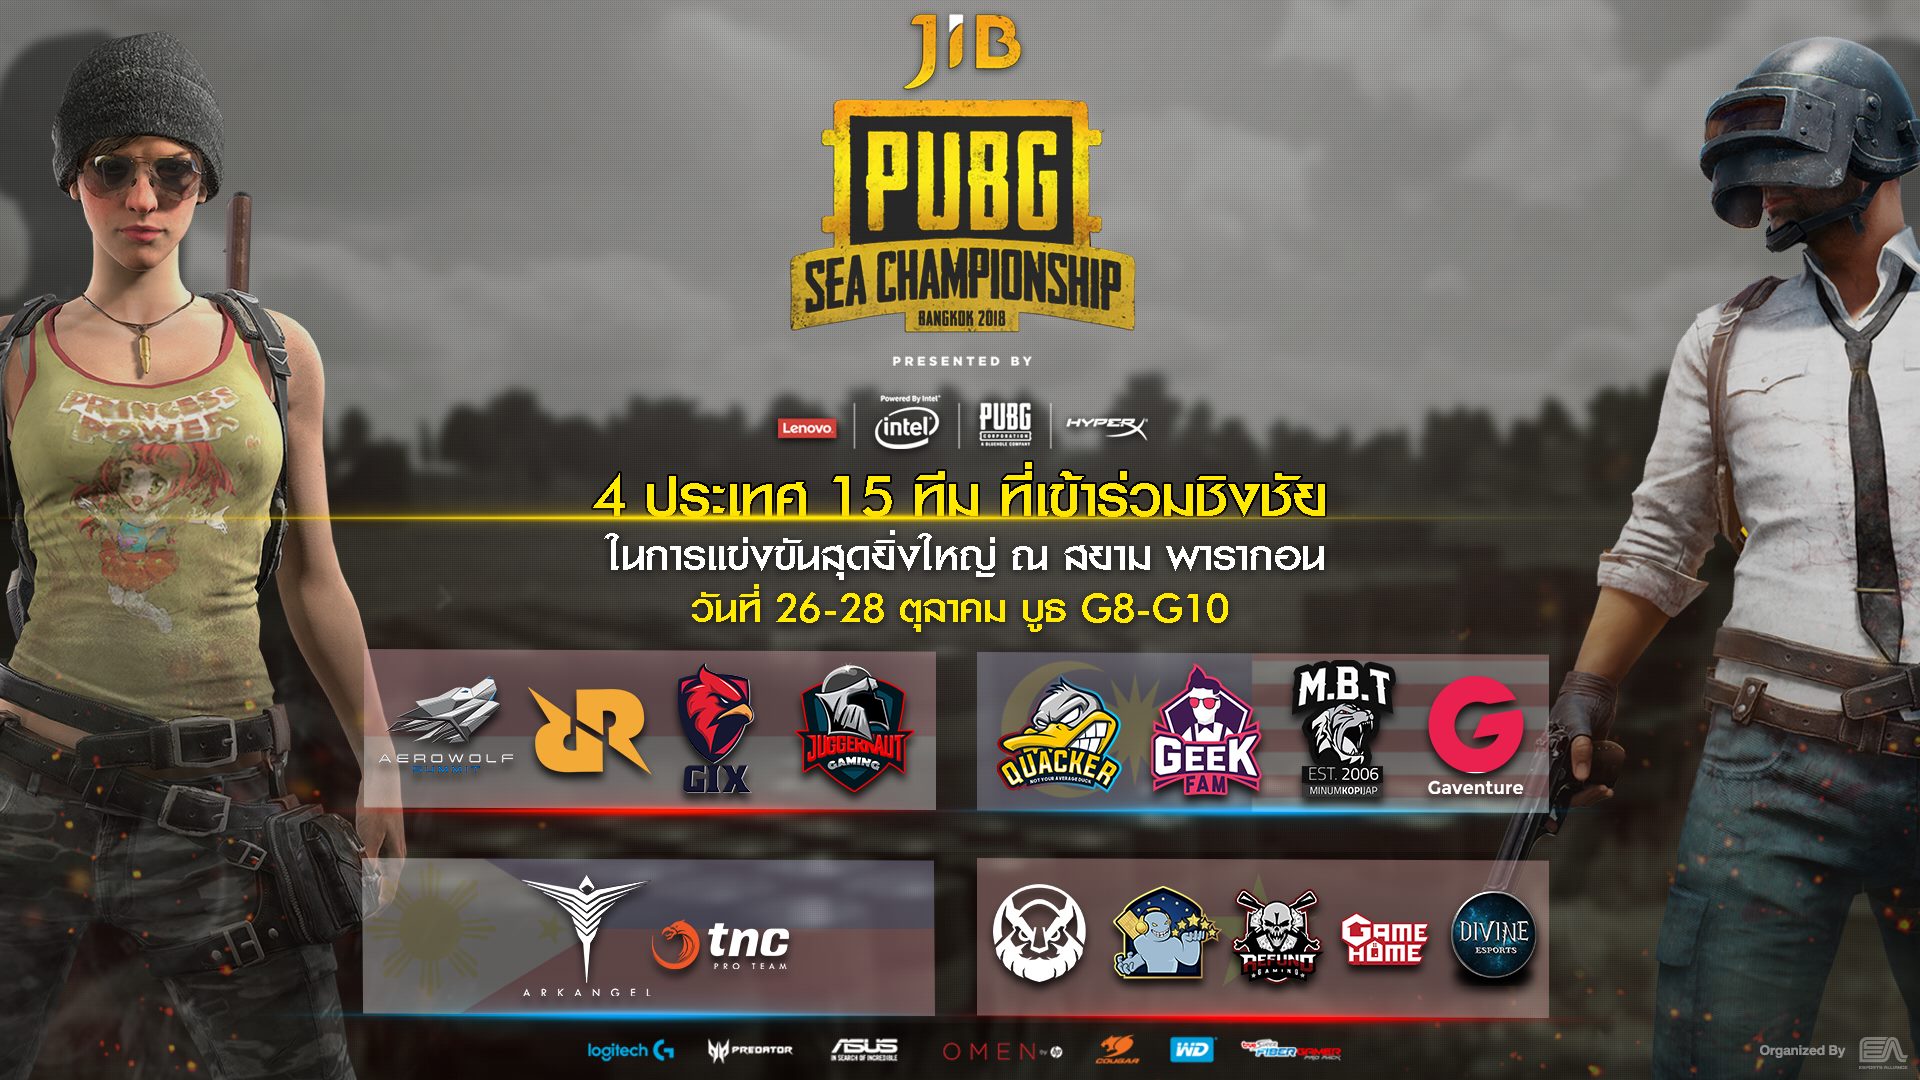 JIB PUBG SEA Championship Bangkok 2018  ชั้น 5 รอยัล พารากอน ฮอลล์ สยาม พารากอน ที่บูธ G8 - G10 วันที่ 26-28 ตุลาคม 2561